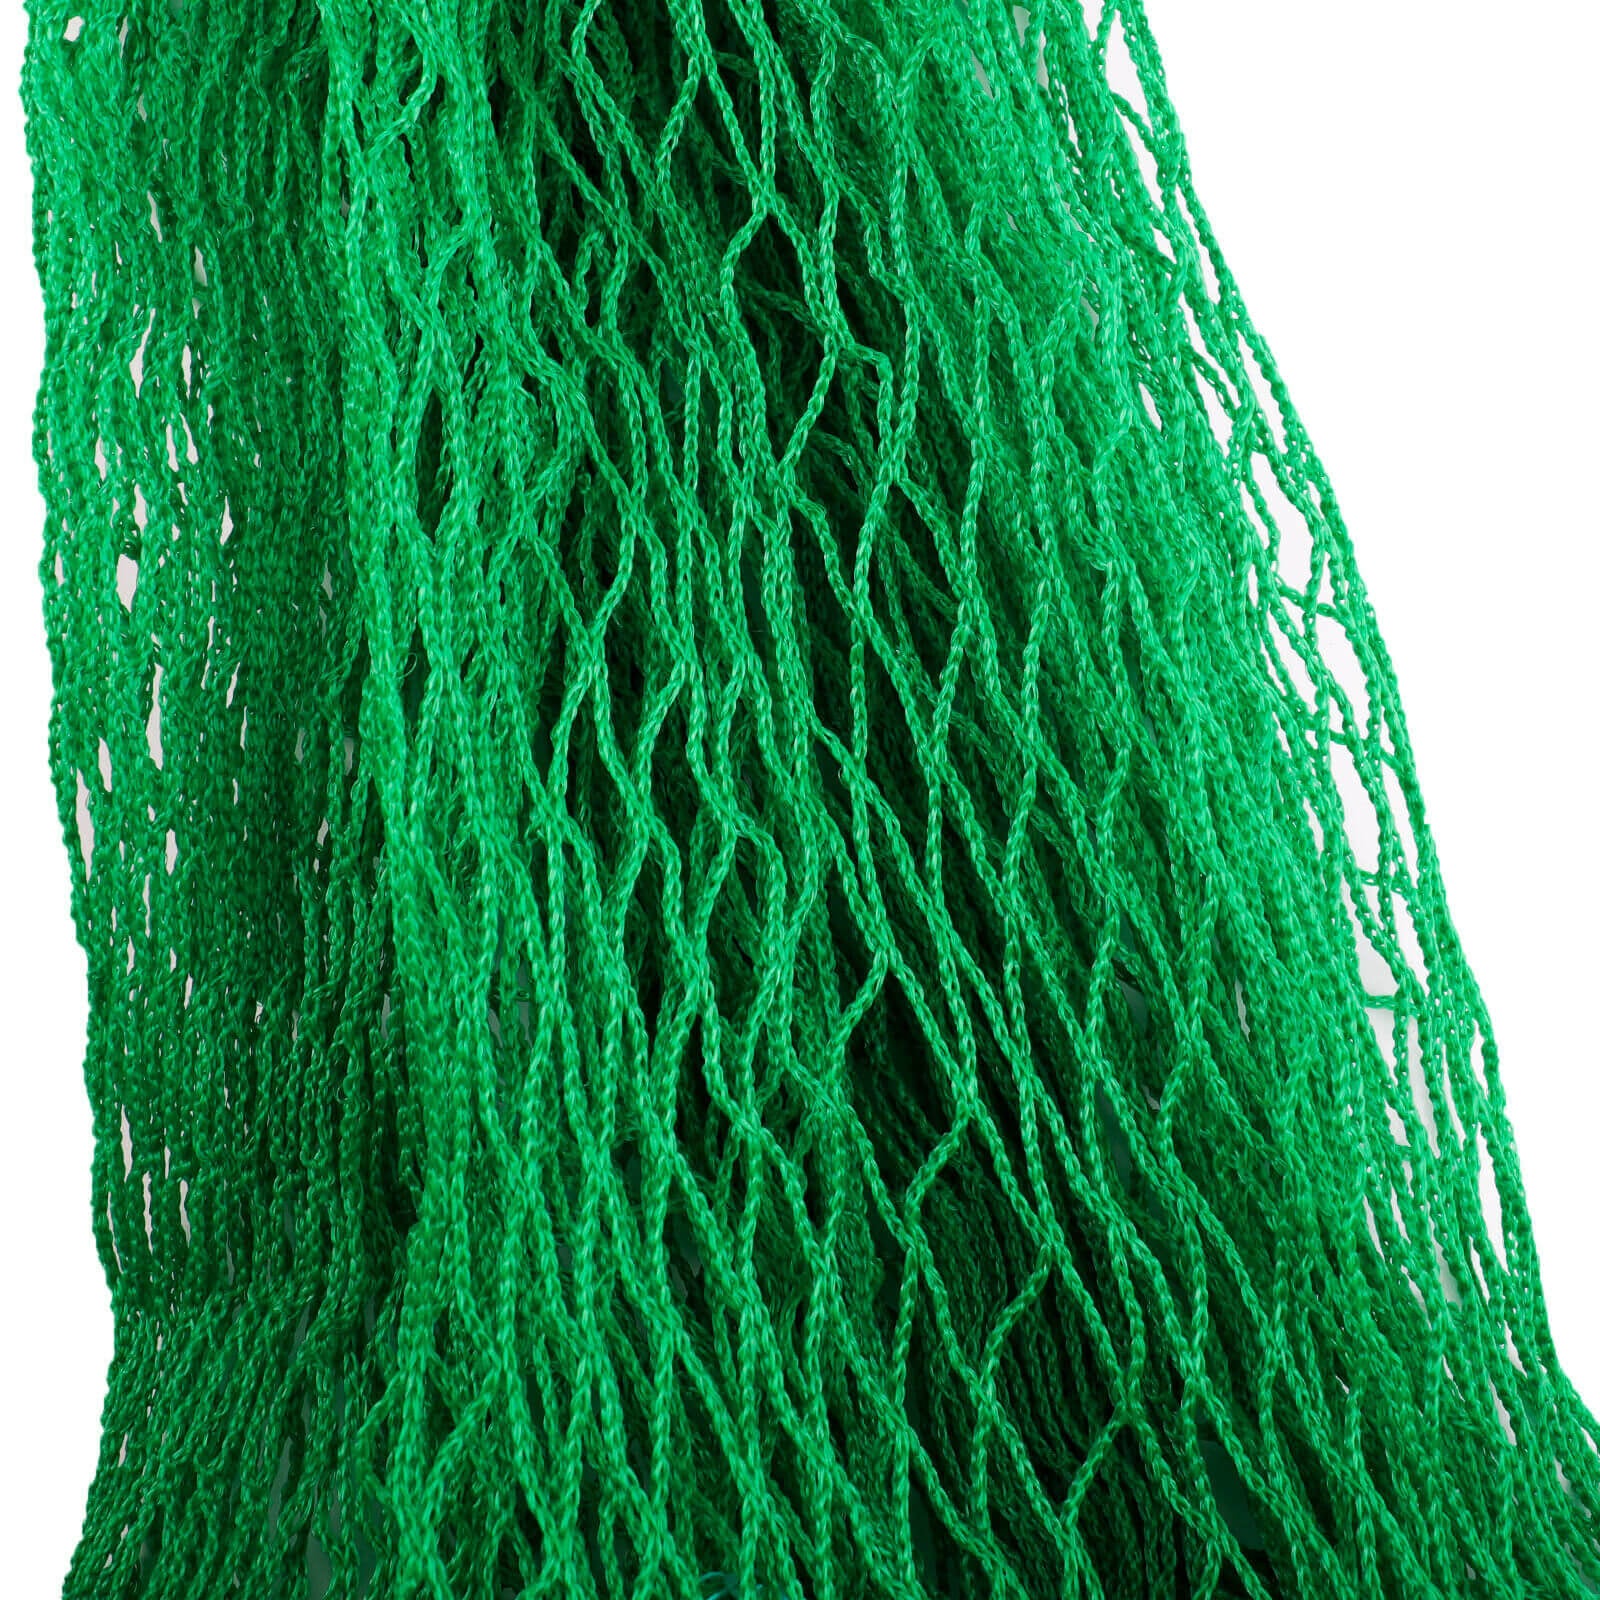 Detail of green practice barrier netting